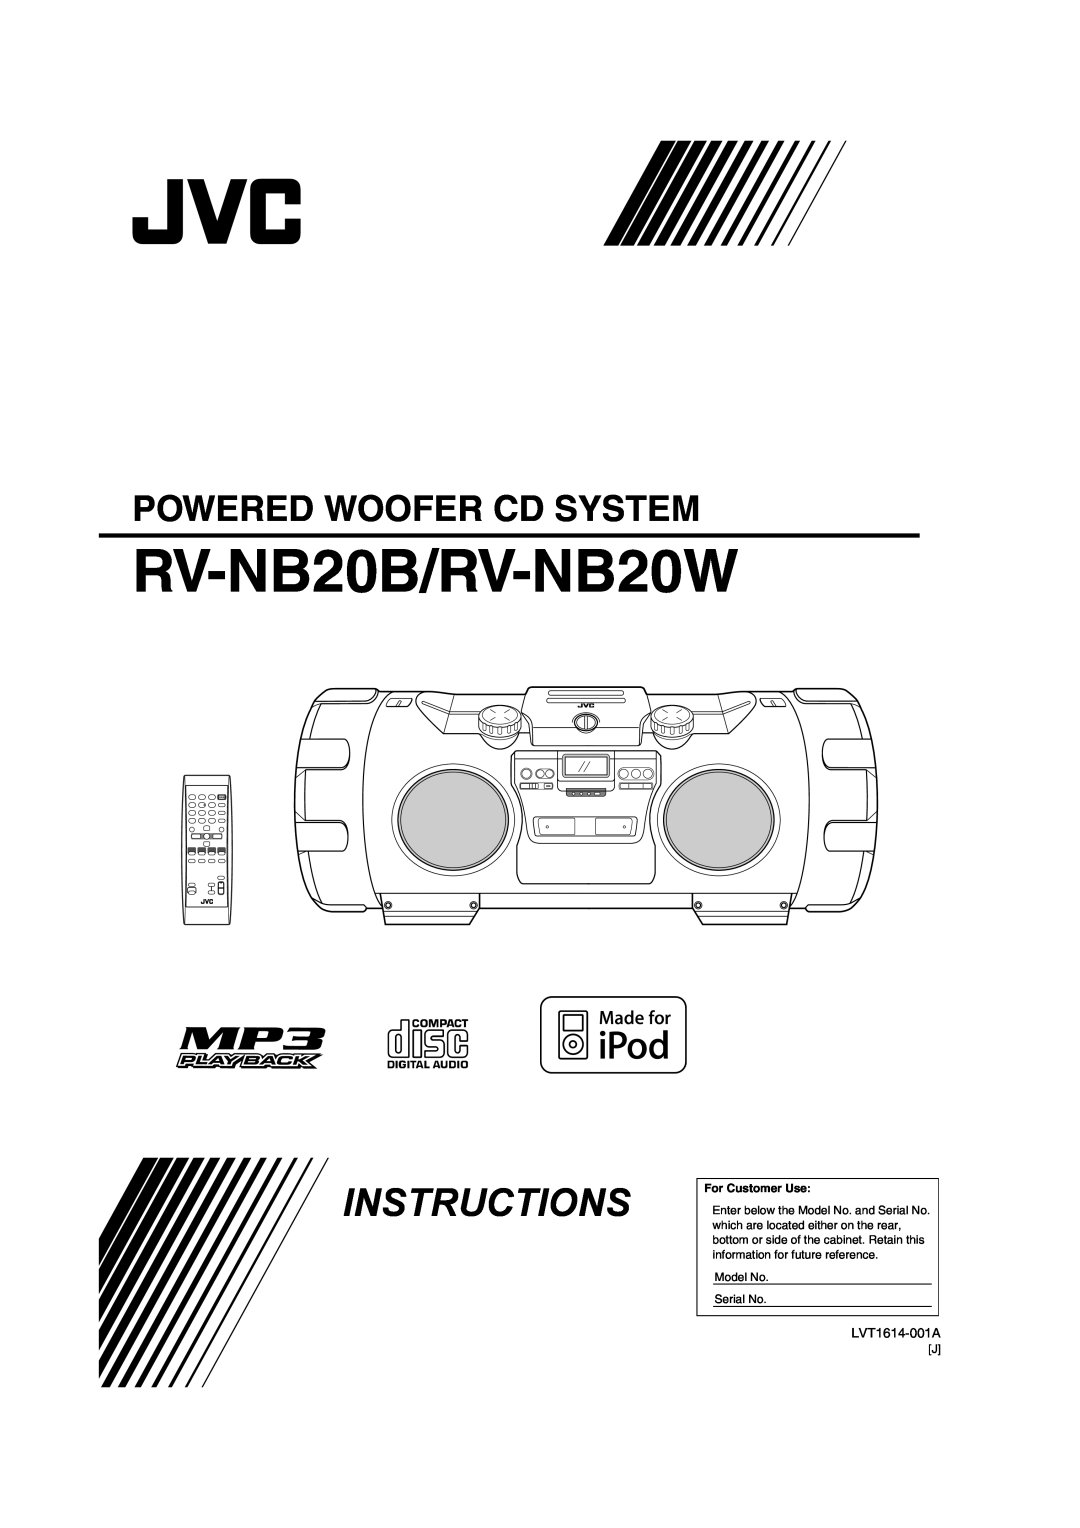 JVC manual RV-NB20B/RV-NB20W, Instructions, Powered Woofer Cd System, For Customer Use 